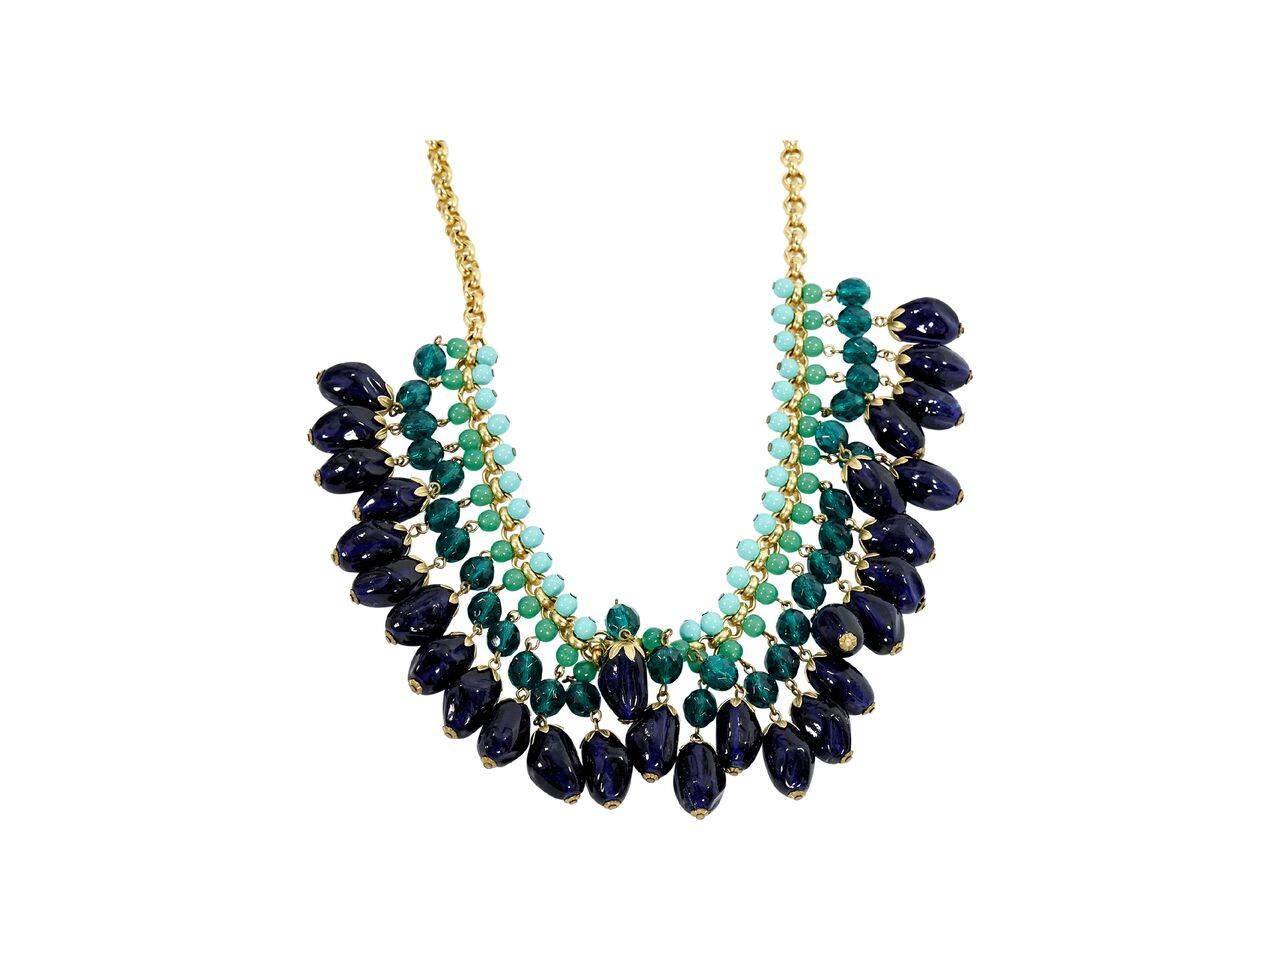 Product details:  Vintage multicolor beaded necklace by Gerad Yosca.  Lobster clasp closure.  Goldtone hardware.  29